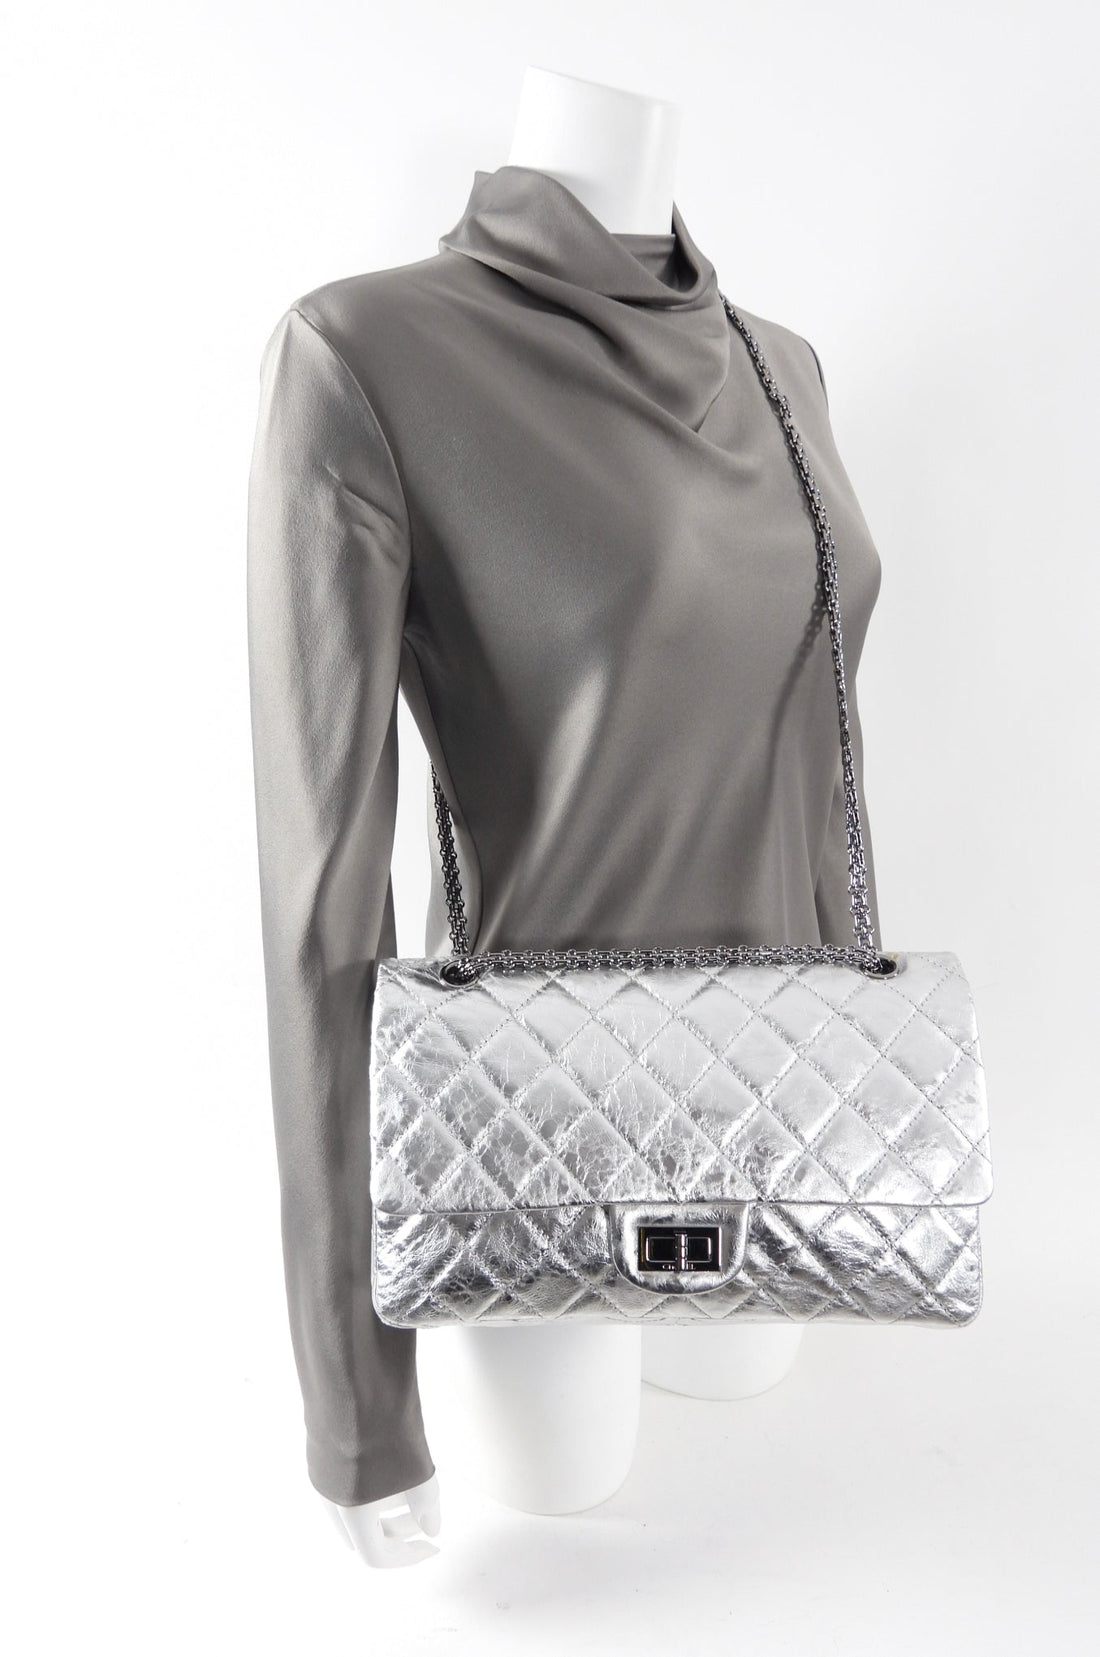 Chanel 2.55 Reissue 227 Maxi Silver Aged Calfskin Flap Bag